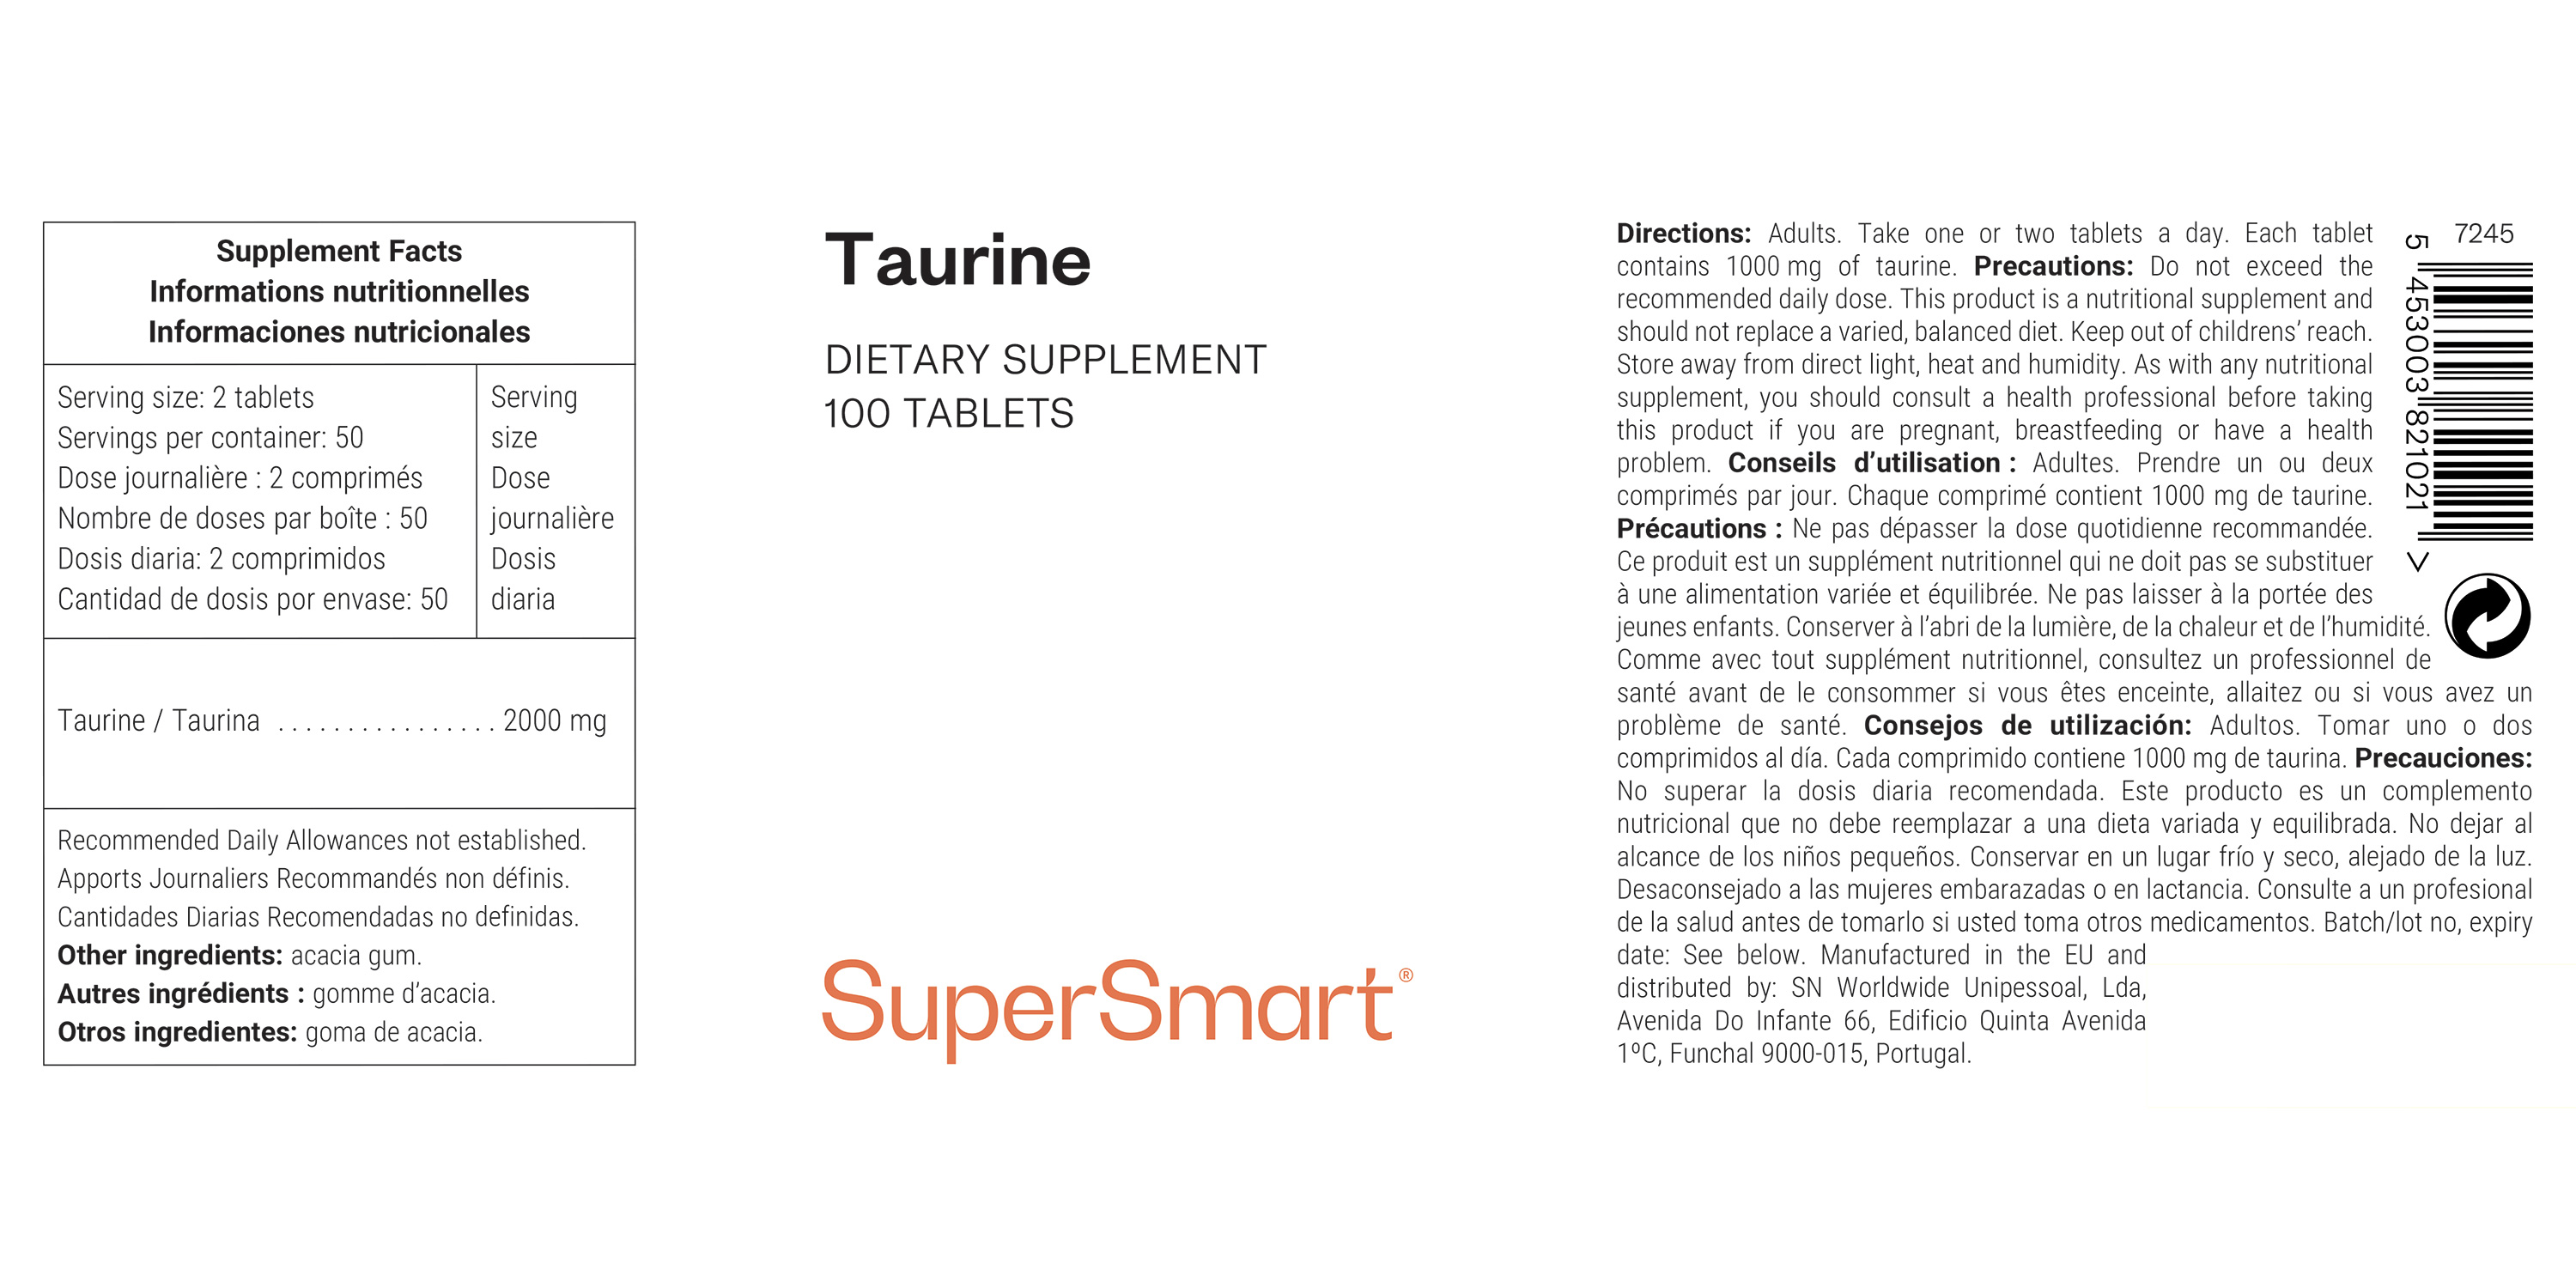 Taurine dietary supplement